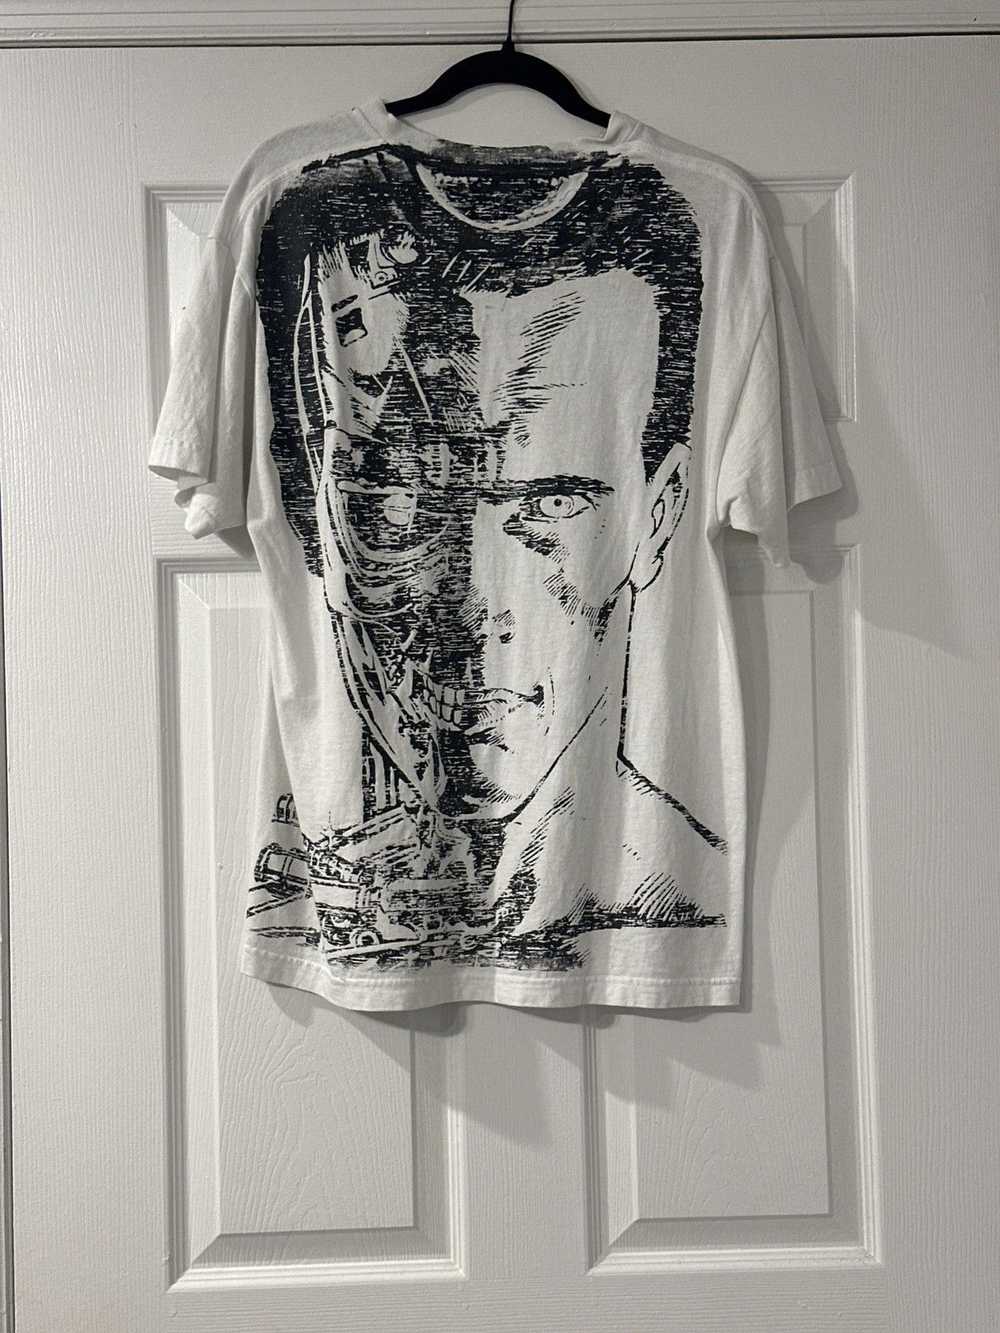 Movie × Streetwear Terminator tee shirt - image 2